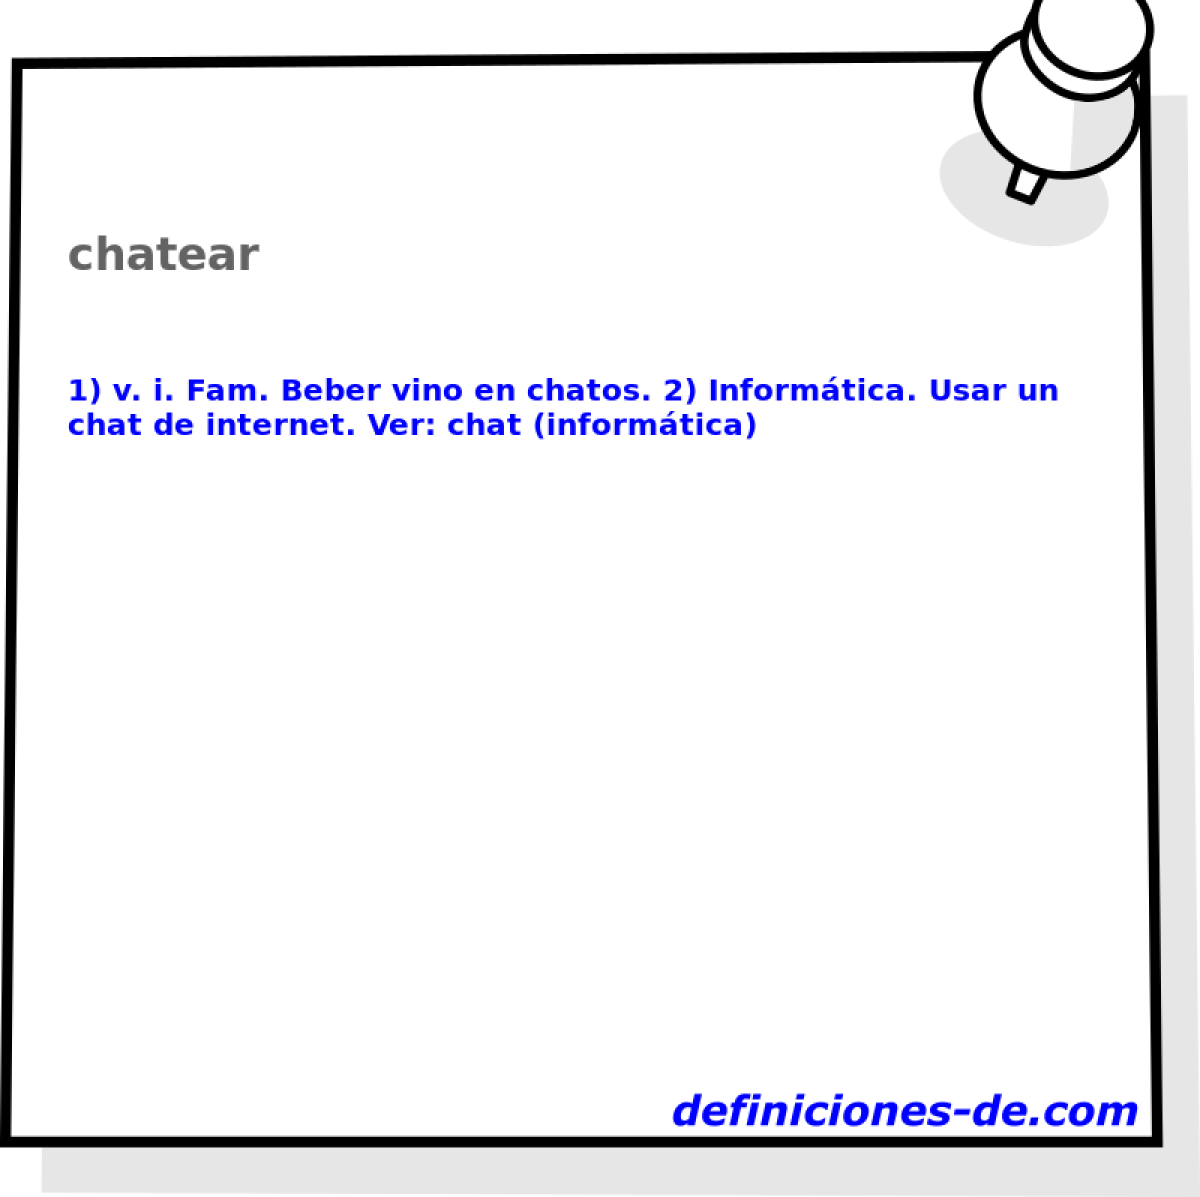 chatear 